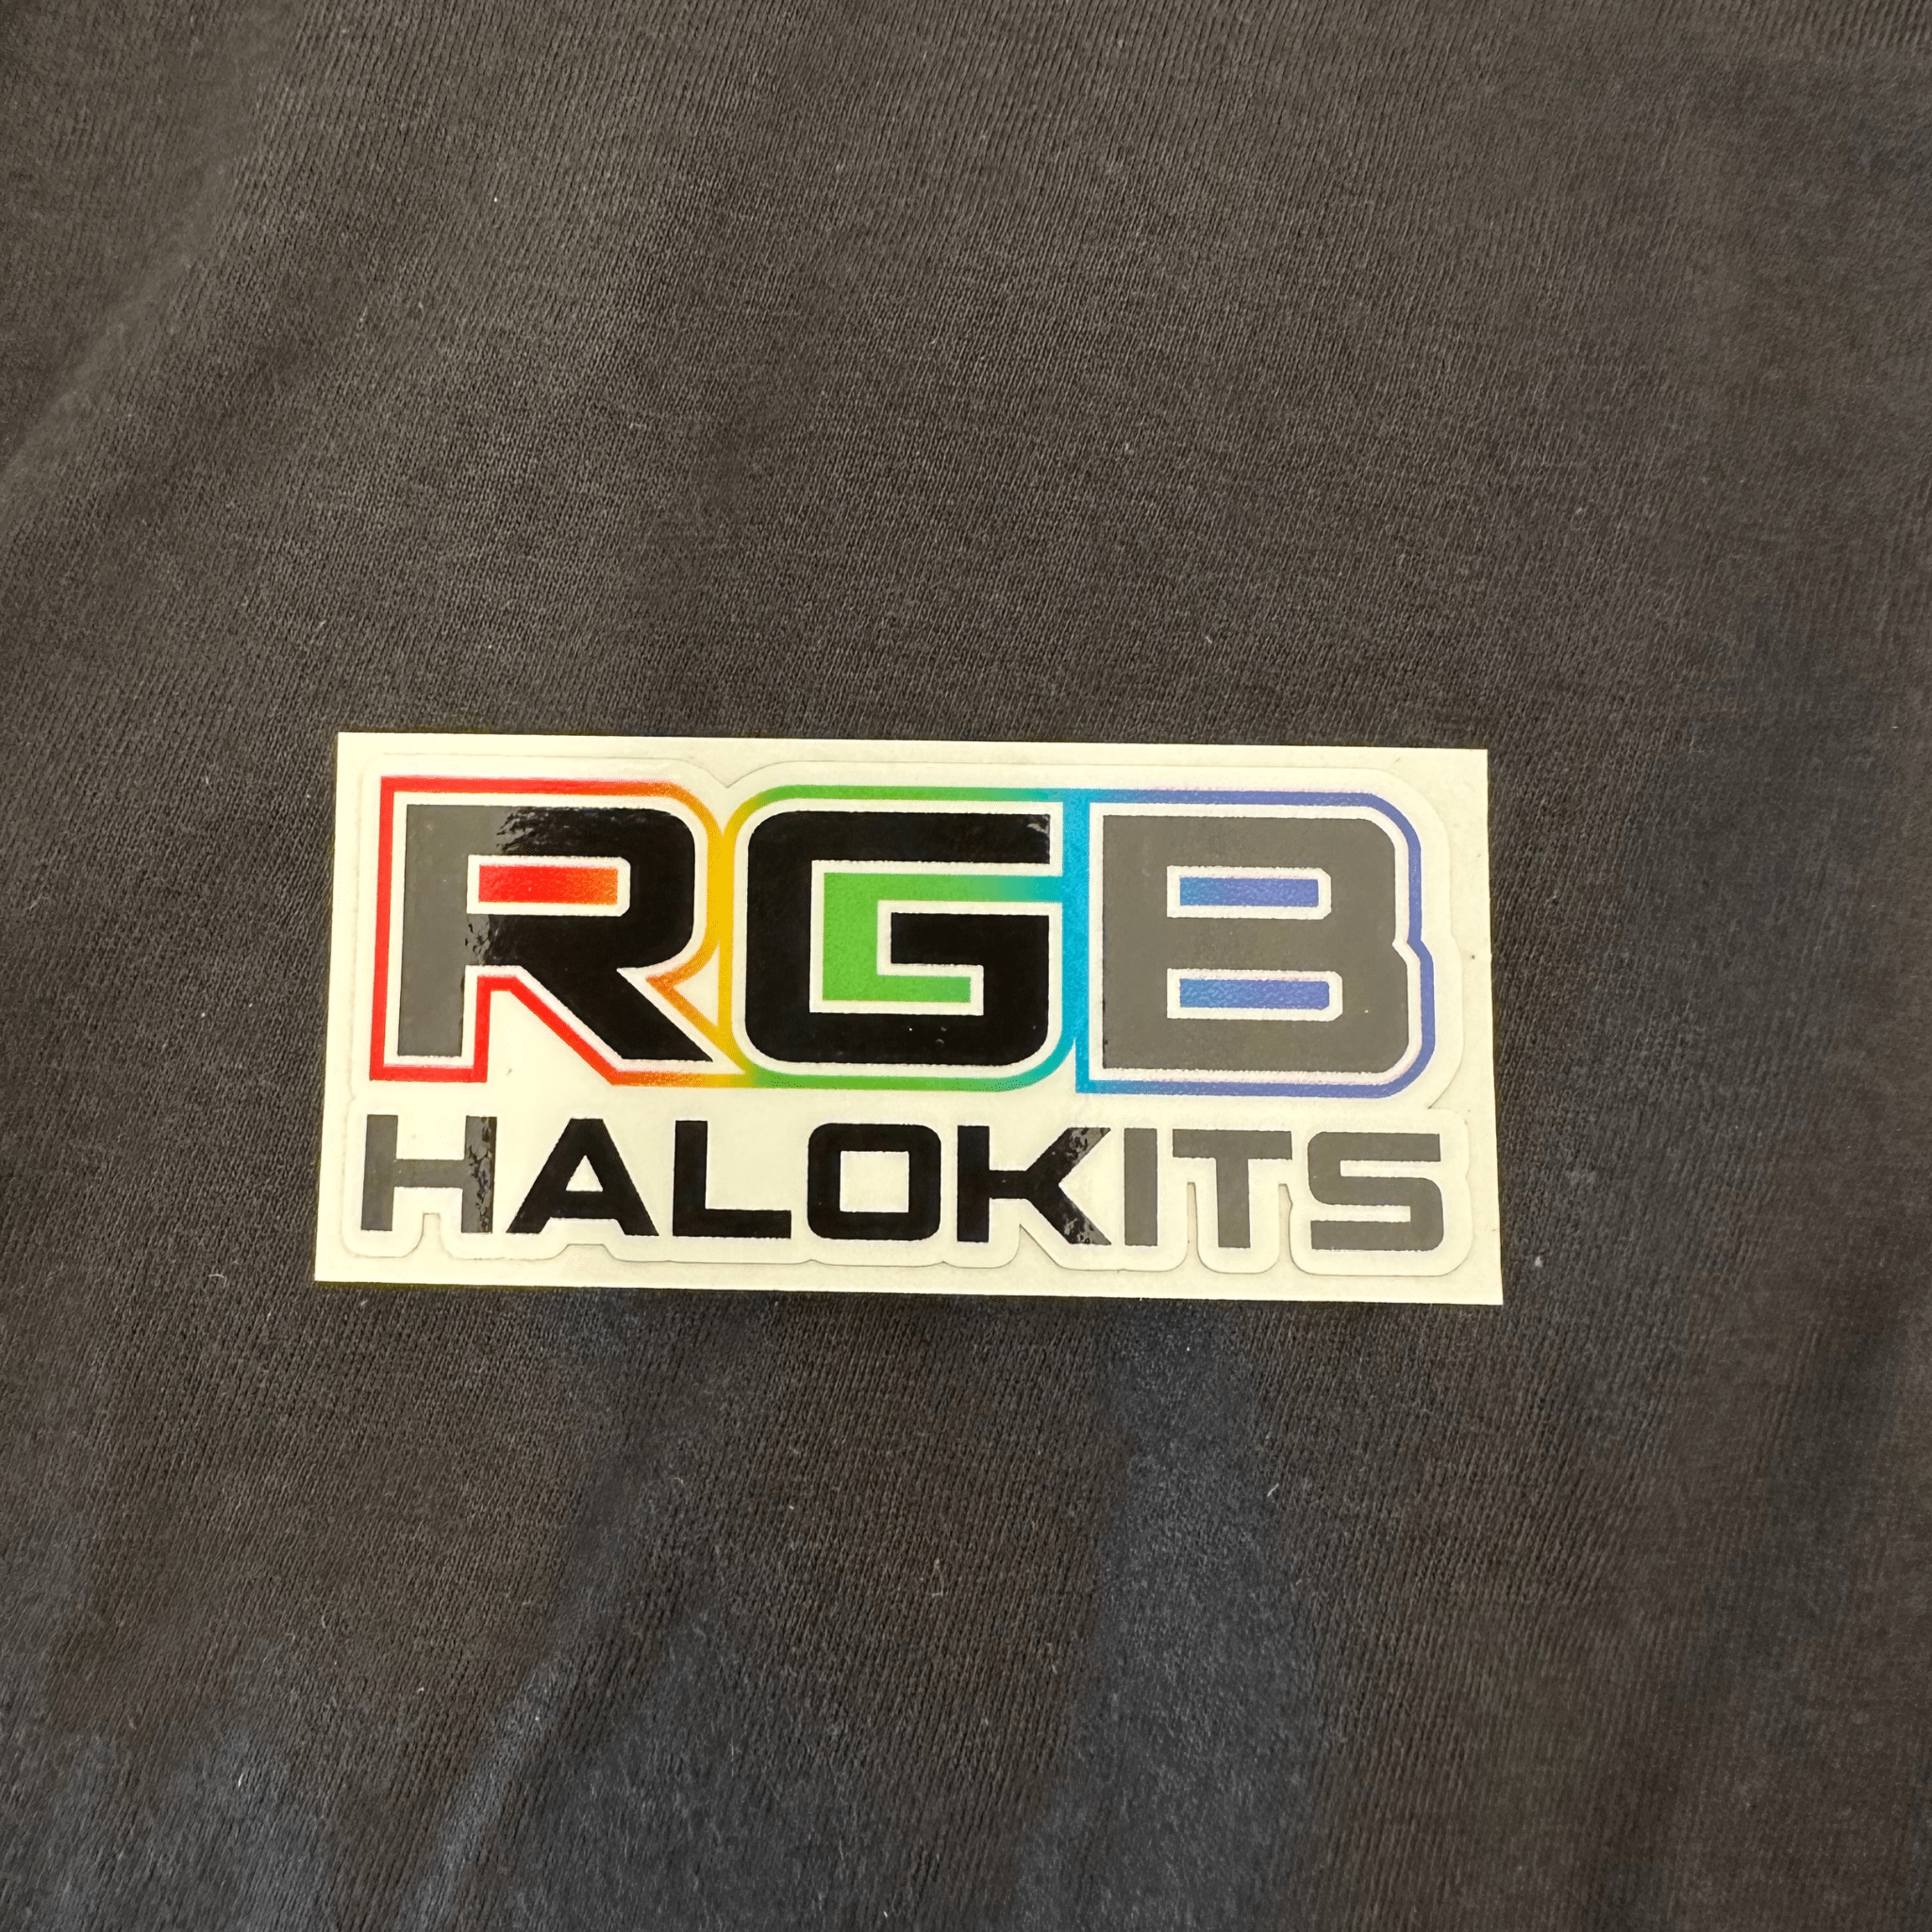 RGB Halo Kits 3x3 (small circular decal) Decals